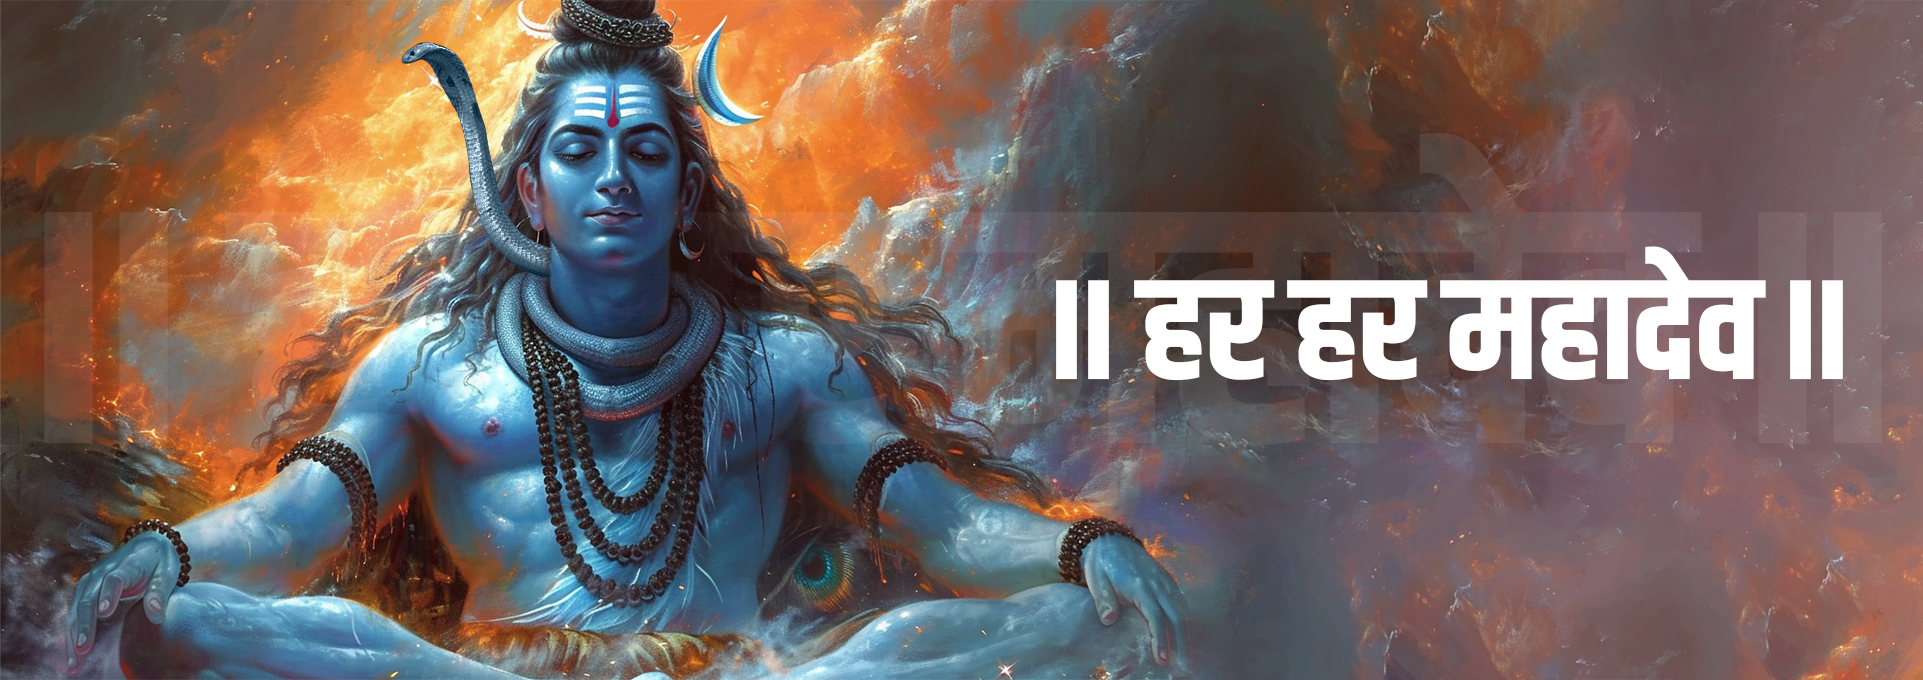 Lord Shiva - Bhakti Marg